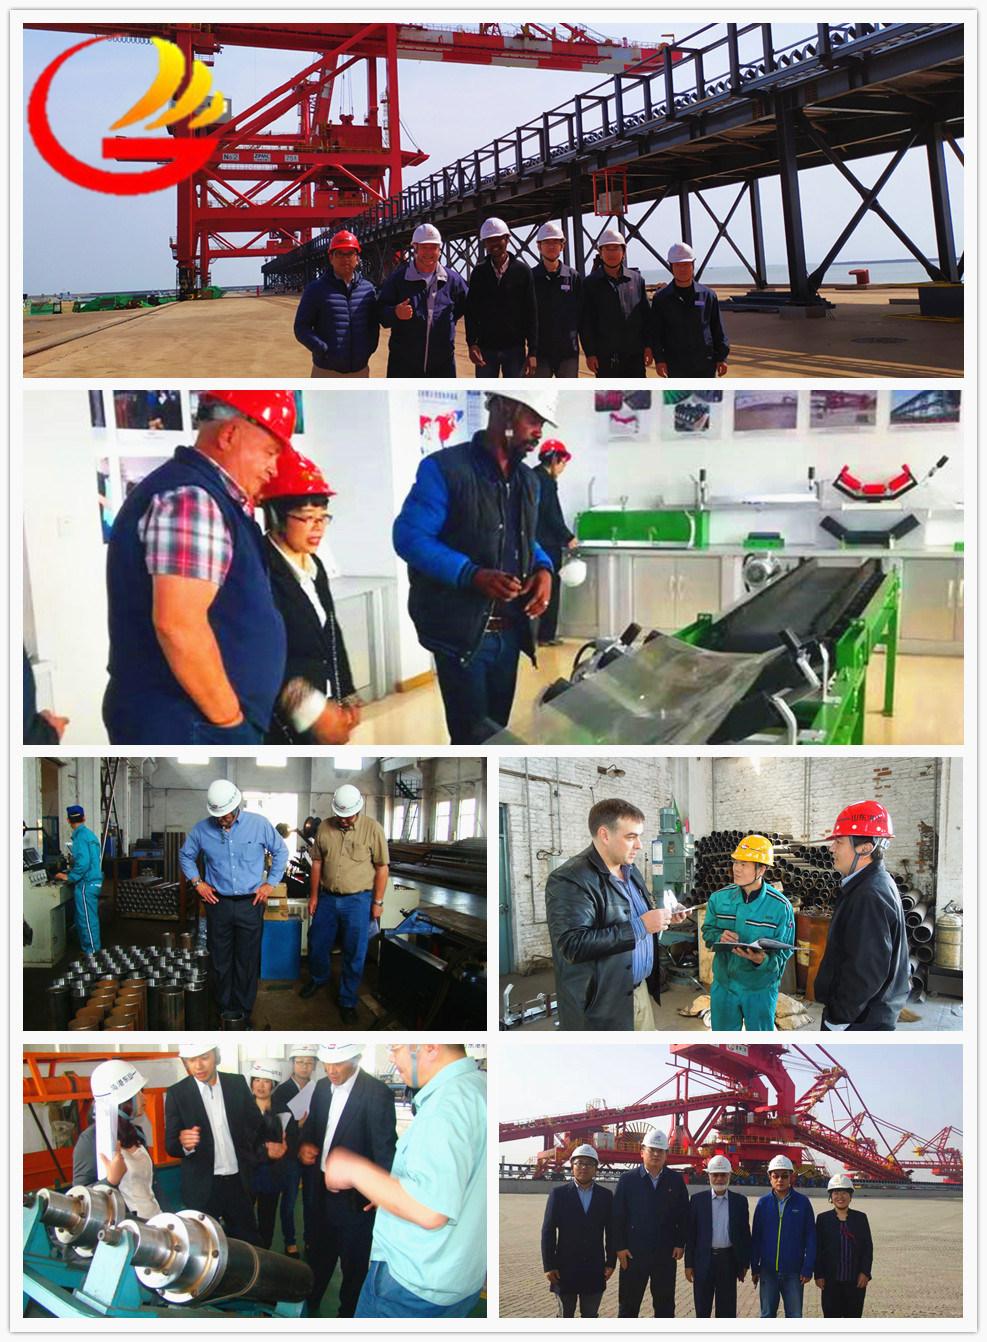 SPD Long-Life Conveyor Steel Carrier Roller for Material Handling Equipments